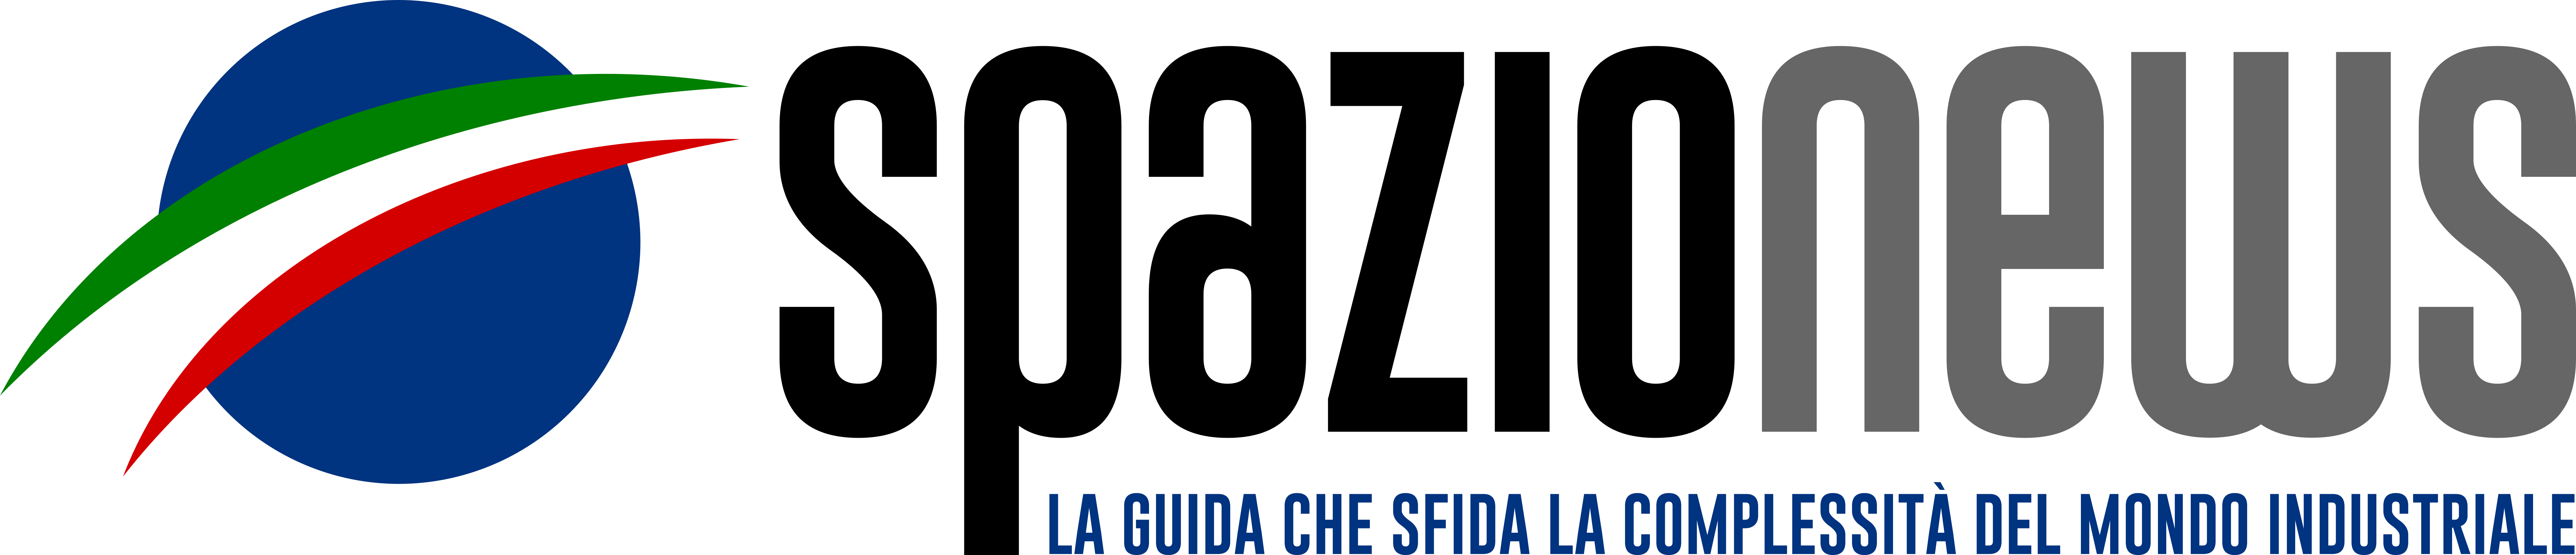 Spazio-News Magazine - Logo - IT - trasparente